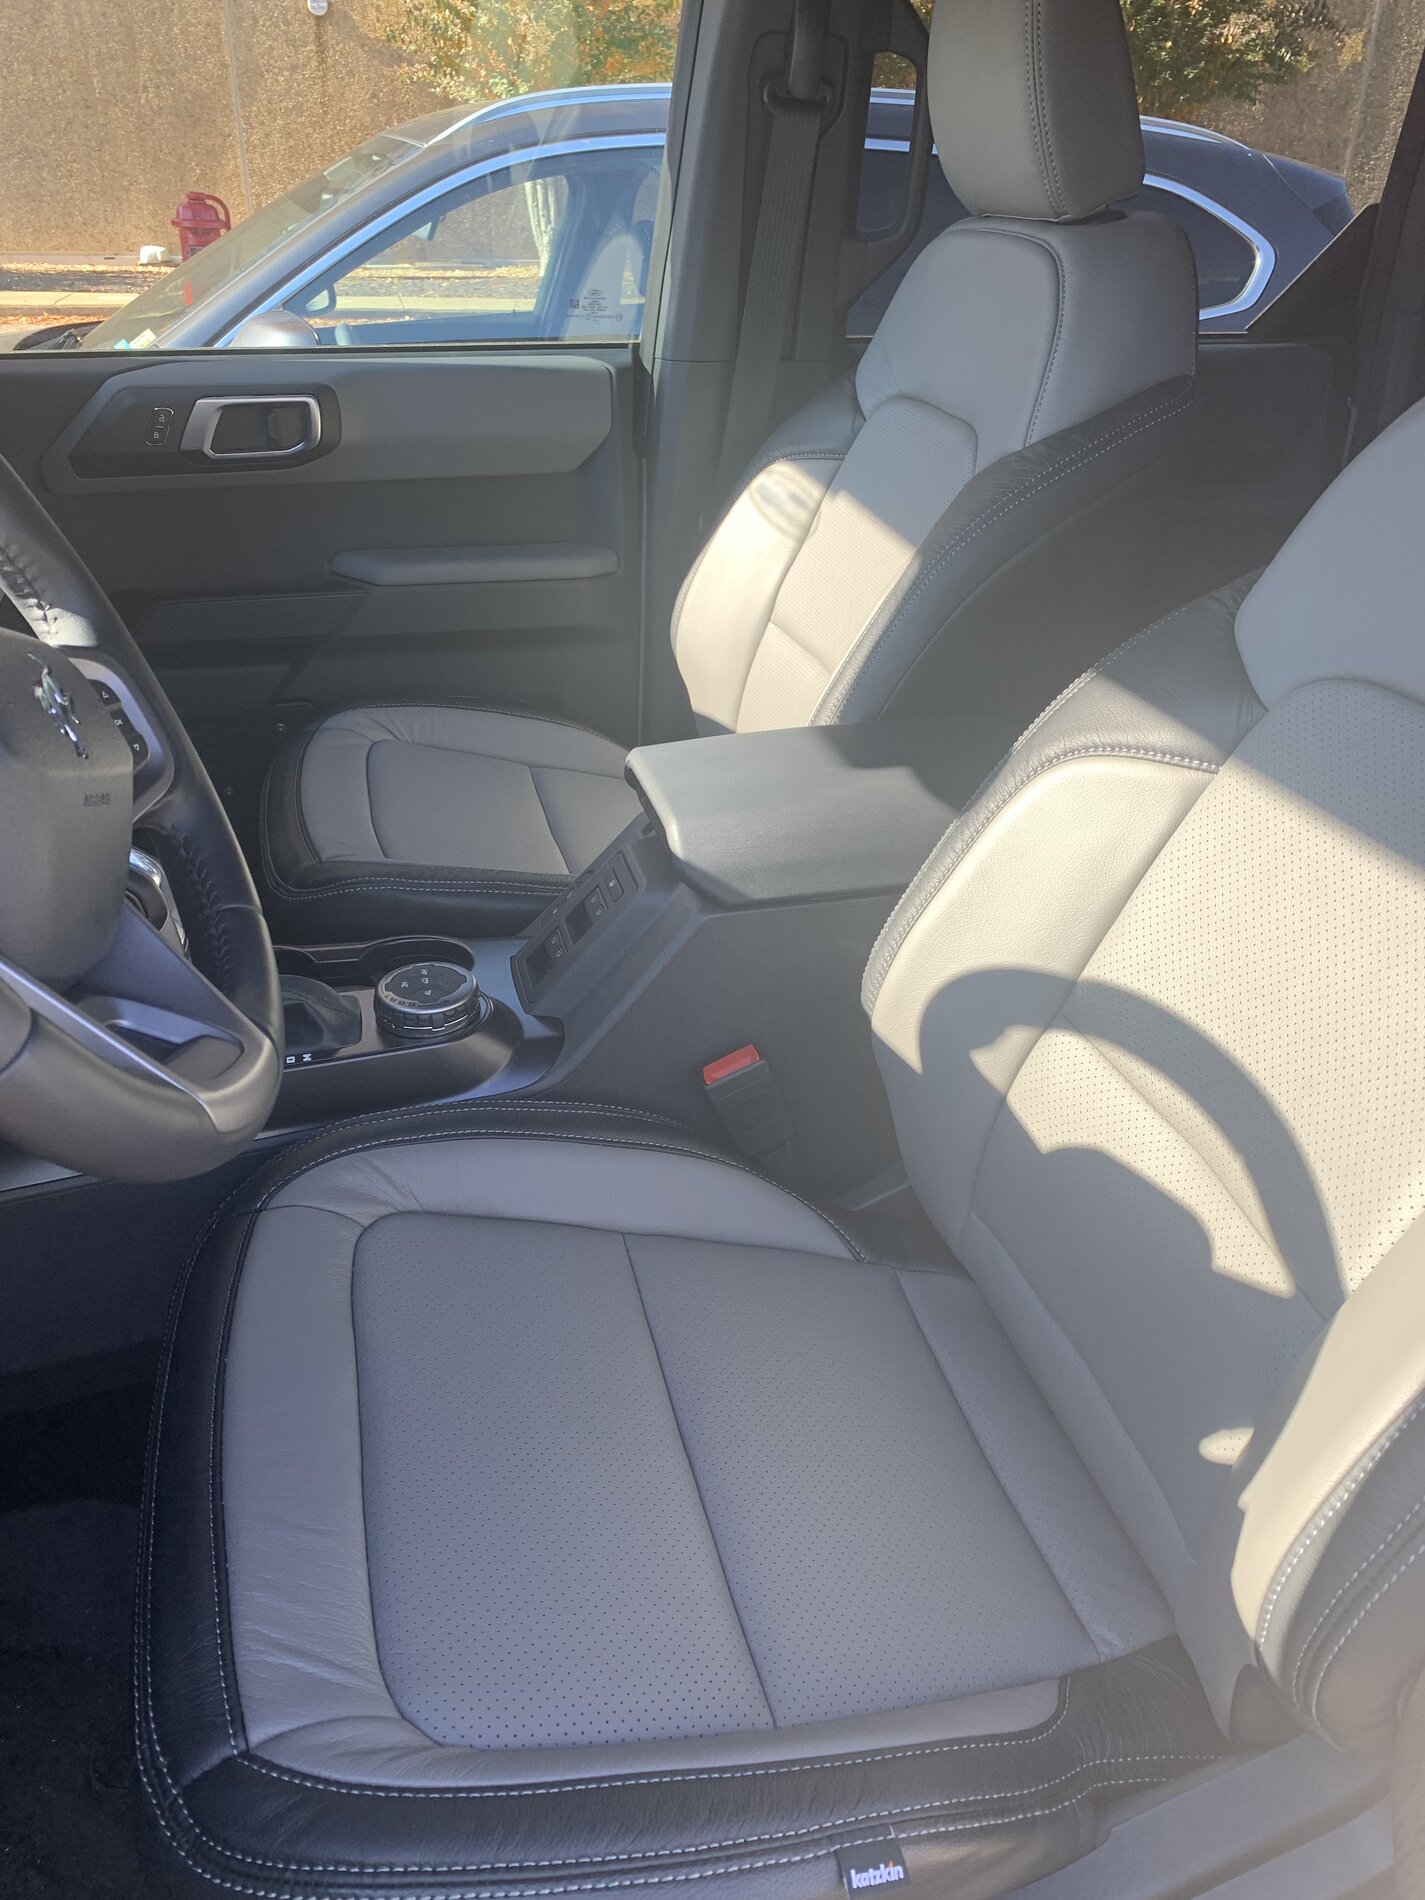 Ford Bronco Installed Katzkin custom leather seat covers in Big Bend interior E5925065-32B5-4202-A19E-0BE1EE6F540F